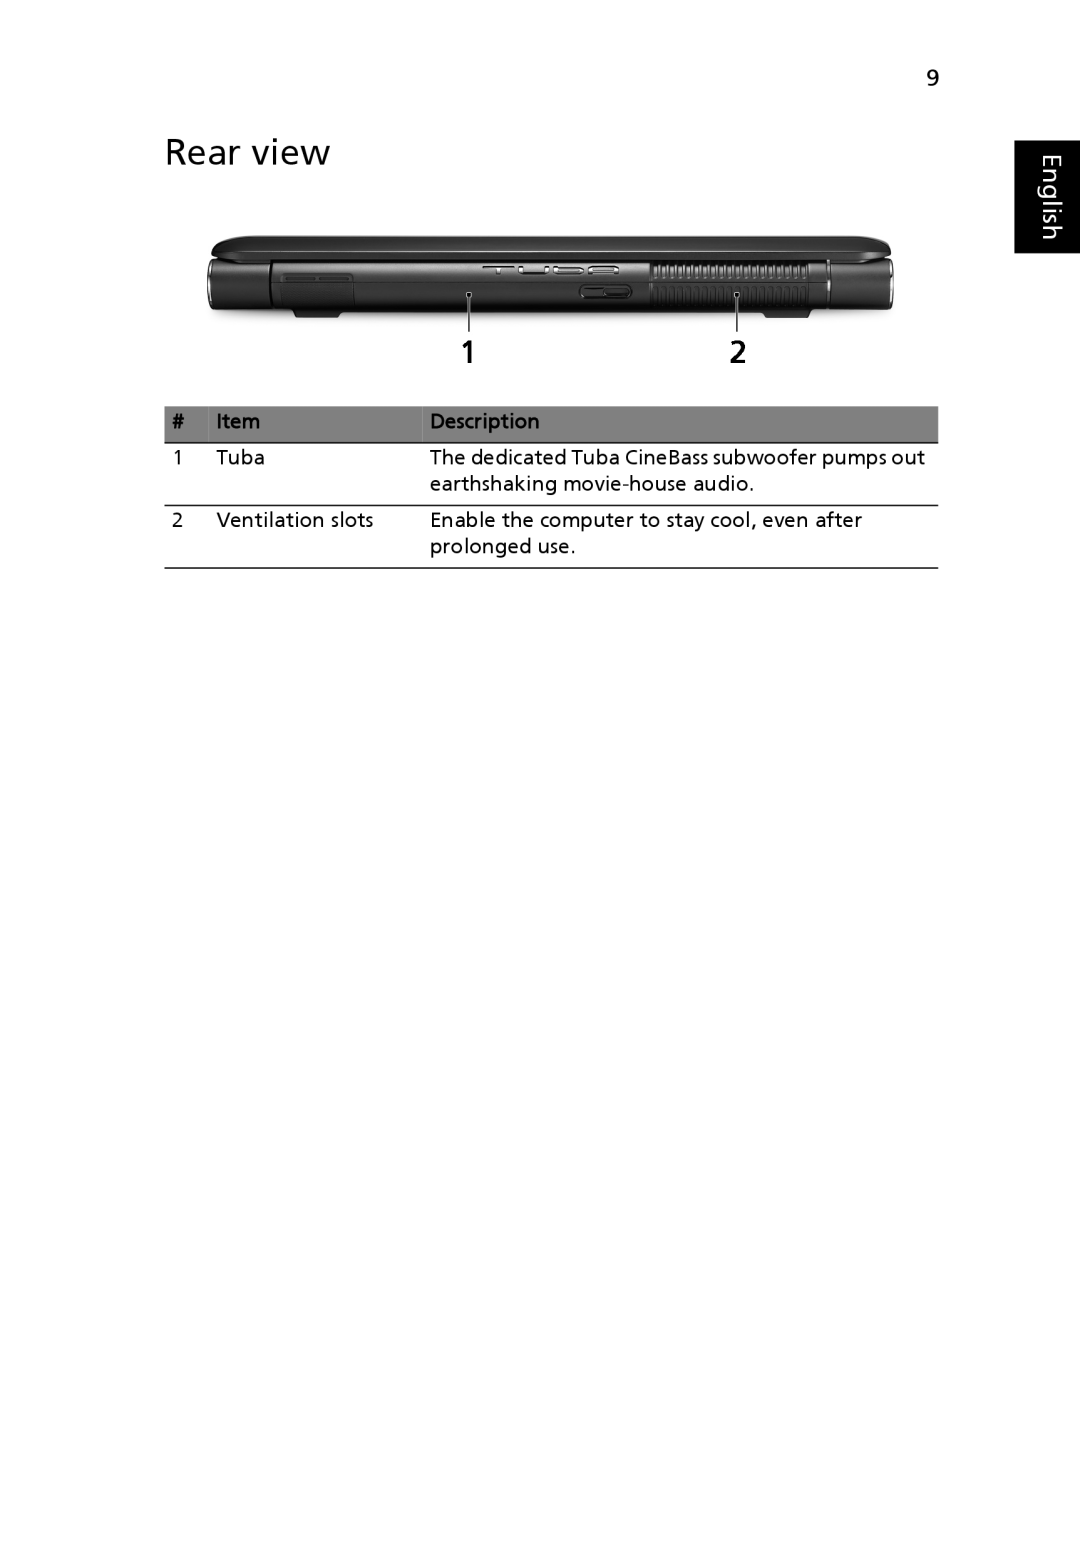 Acer 6935 Series Rear view, English, Description, The dedicated Tuba CineBass subwoofer pumps out, Ventilation slots 